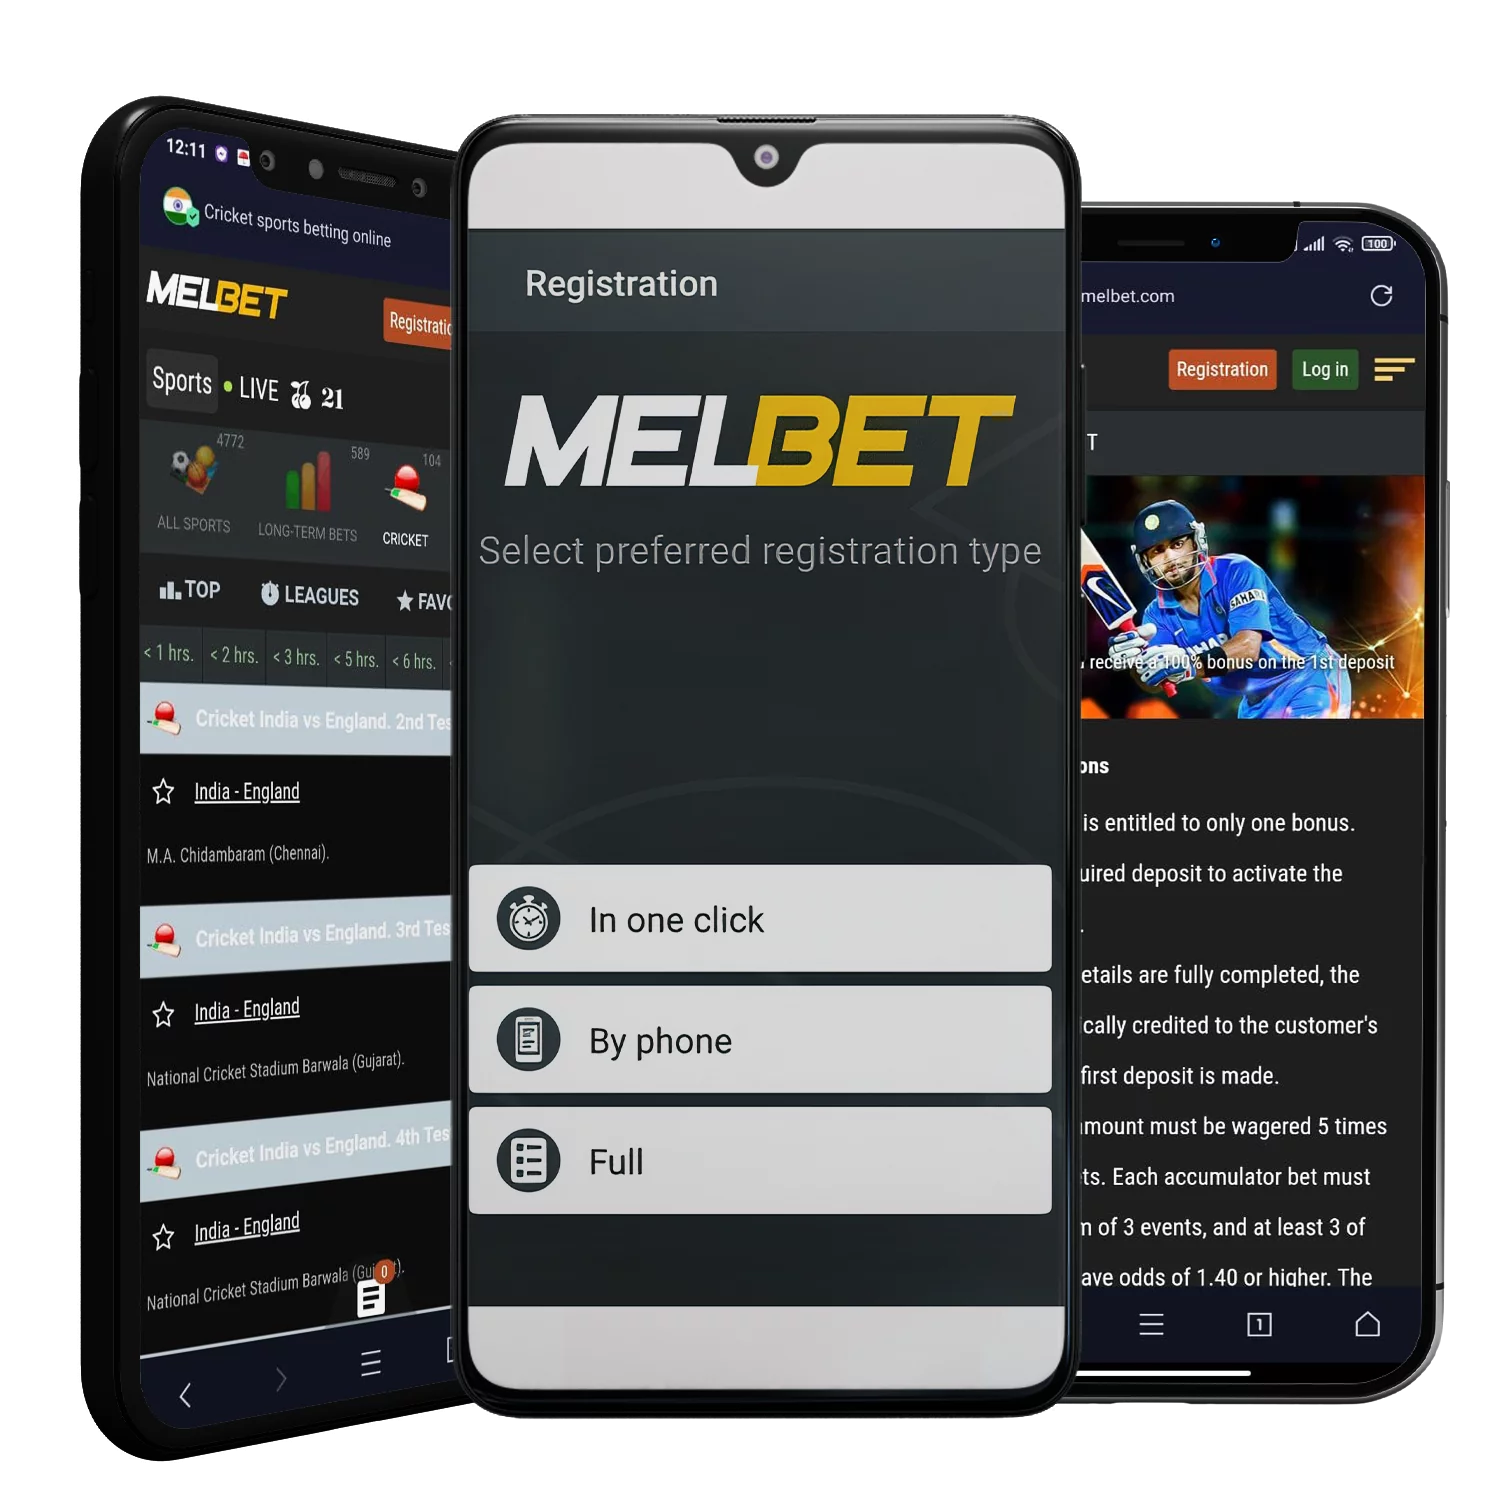 Завантажте додаток Мелбет для Android або iPhone для онлайн -спорту та ставок на казино. Отримайте бонус до 100% на перший депозит